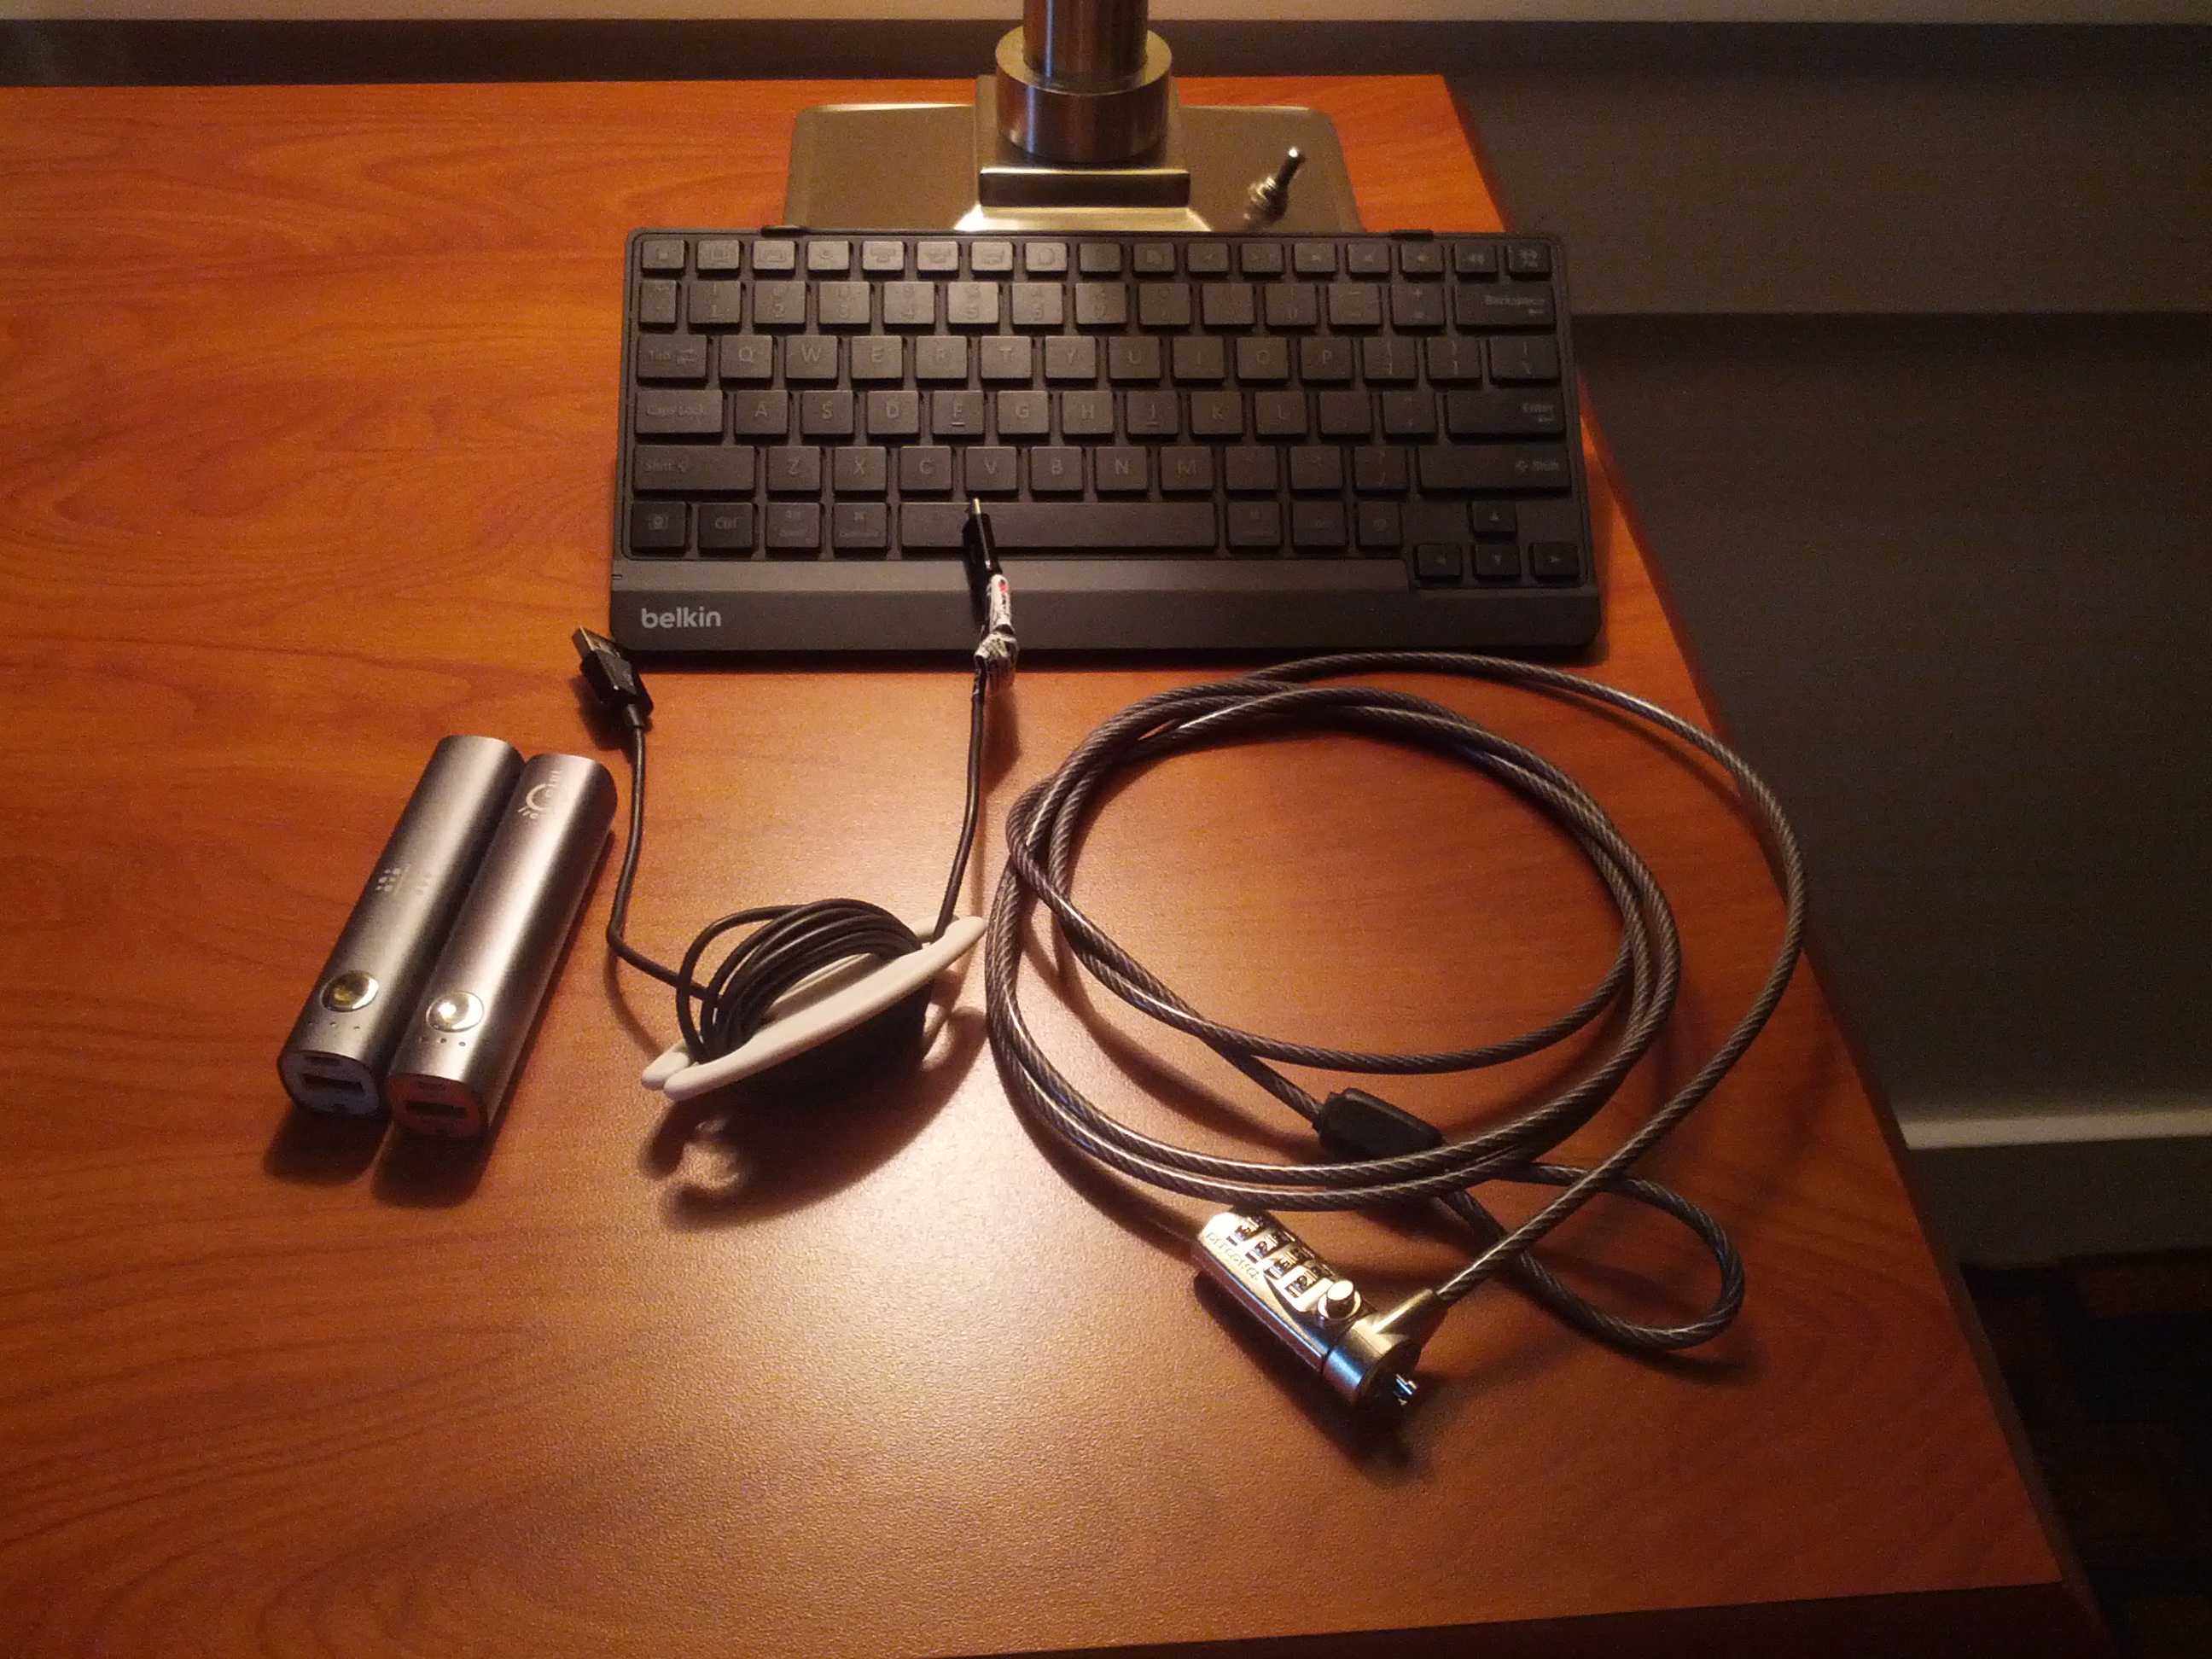 Bluetooth keyboard, backup batteries, cord wrangler, and laptop lock.